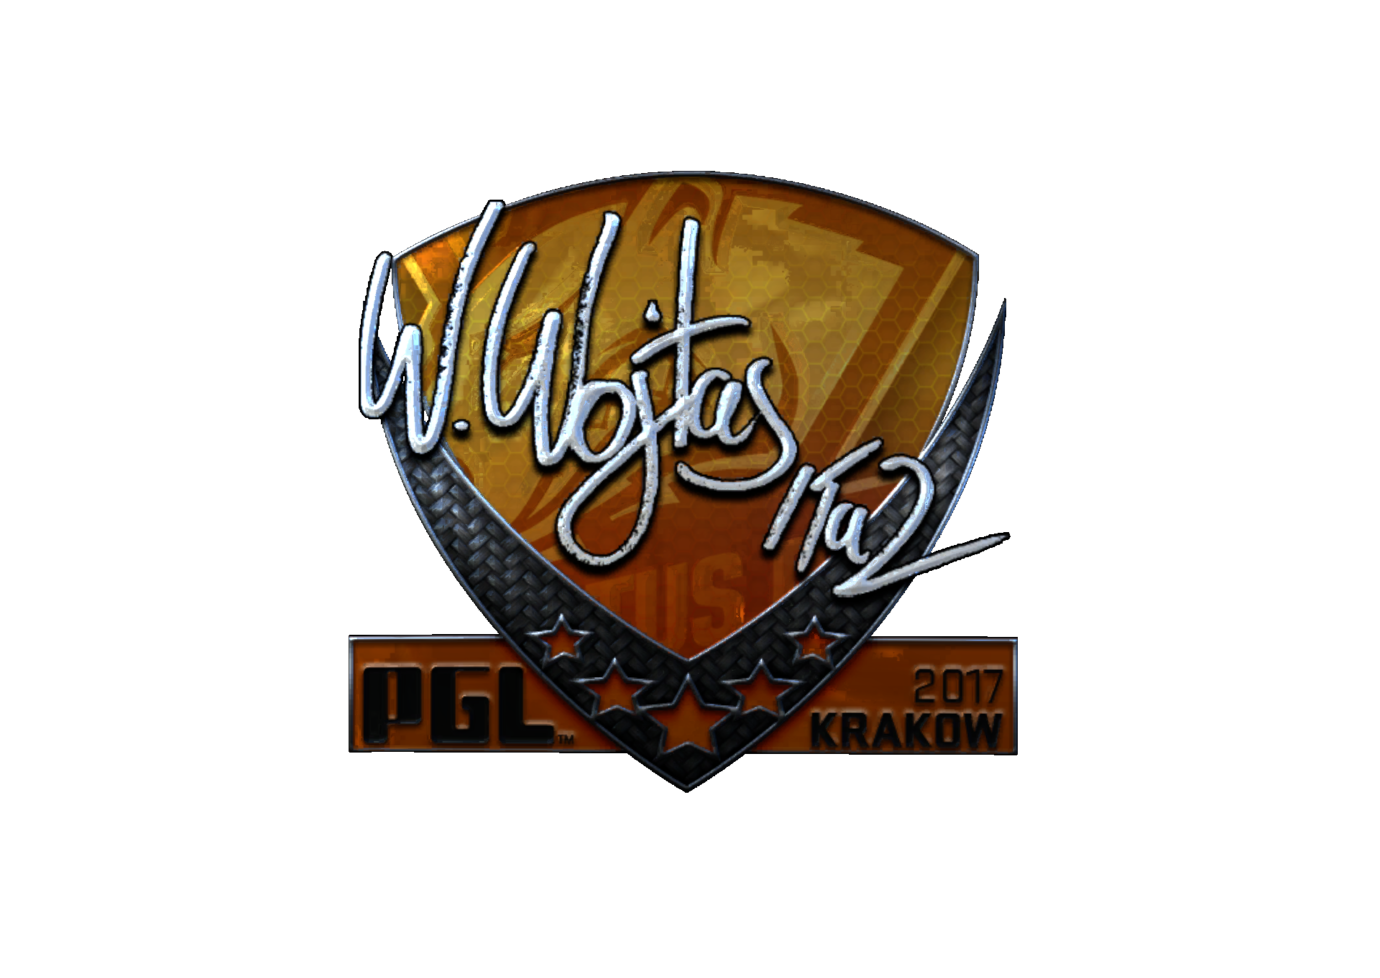 Наклейки краков. PGL Krakow 2017 наклейка. Krakow 2017 наклейки. Золотые наклейки КС го. Краков 2017 наклейка.